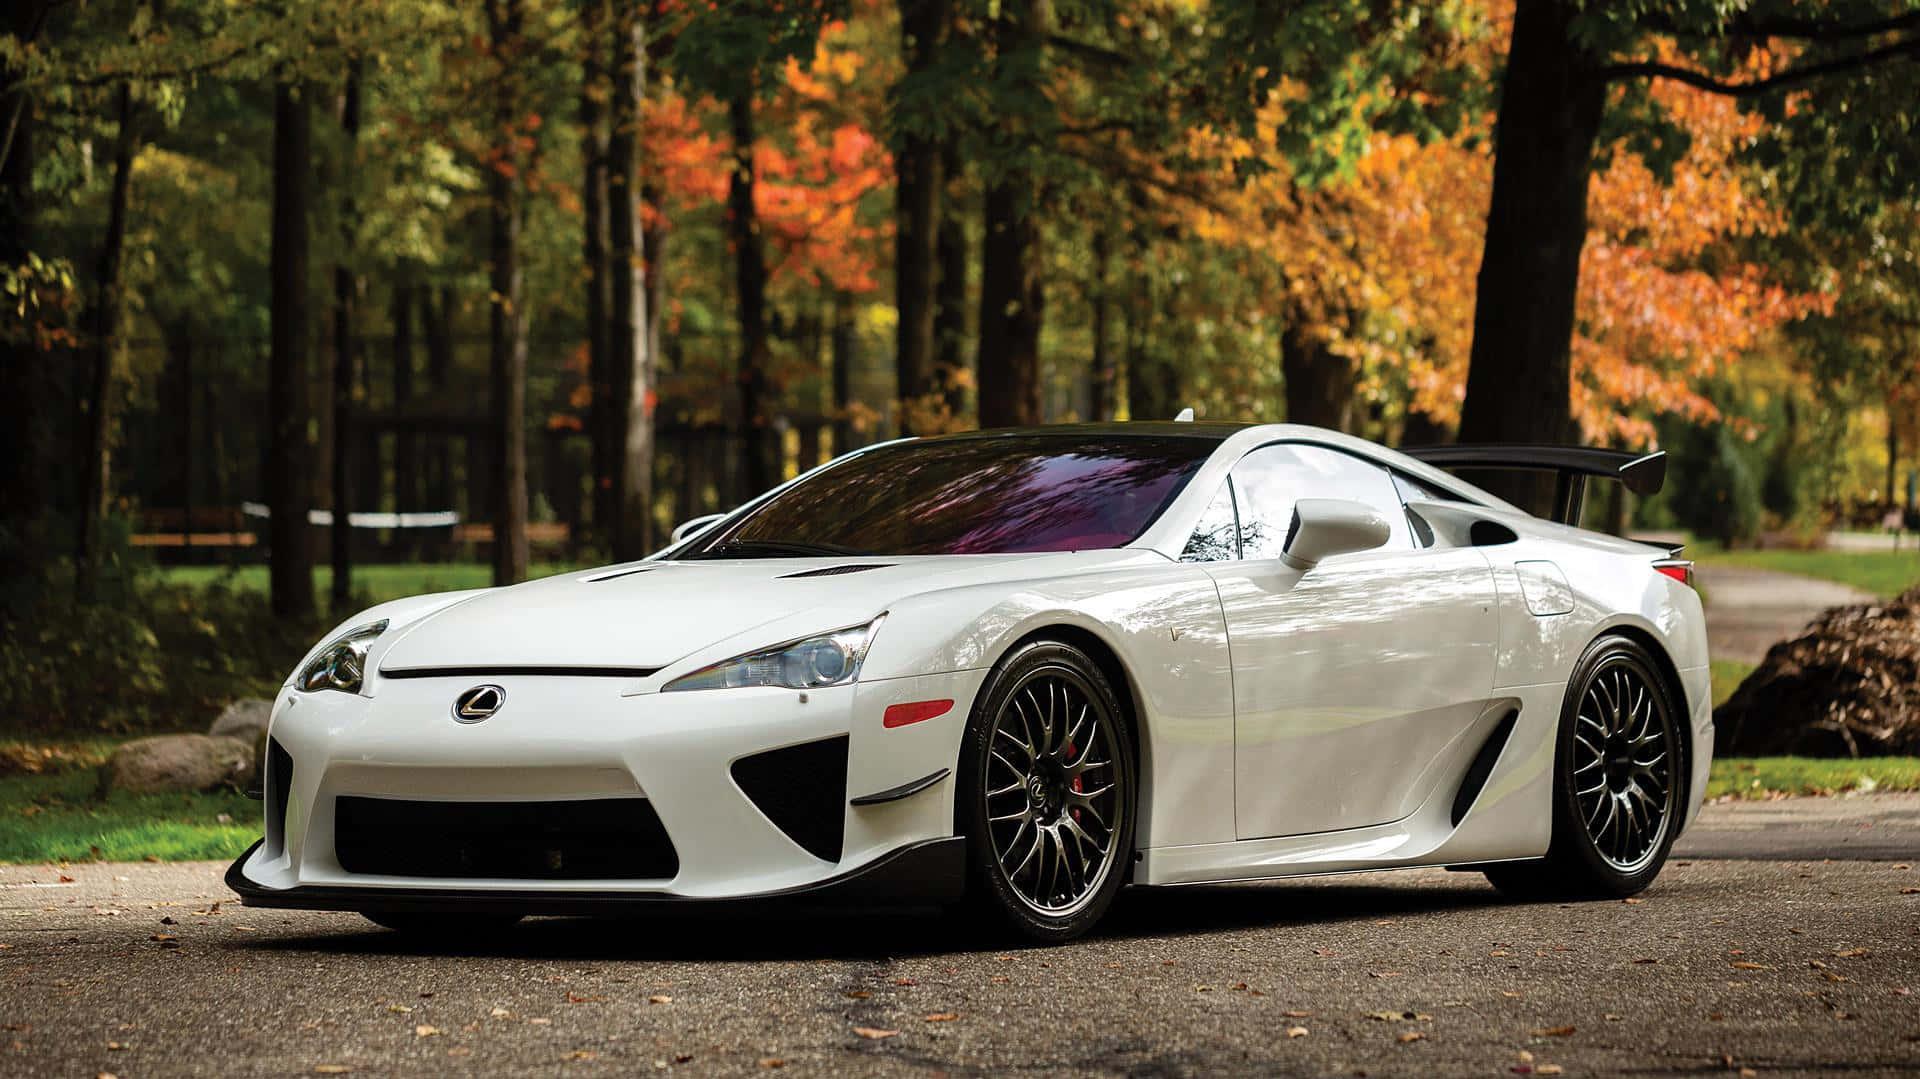 A Stunning Lexus Lfa Exuding Elegance And Speed Wallpaper